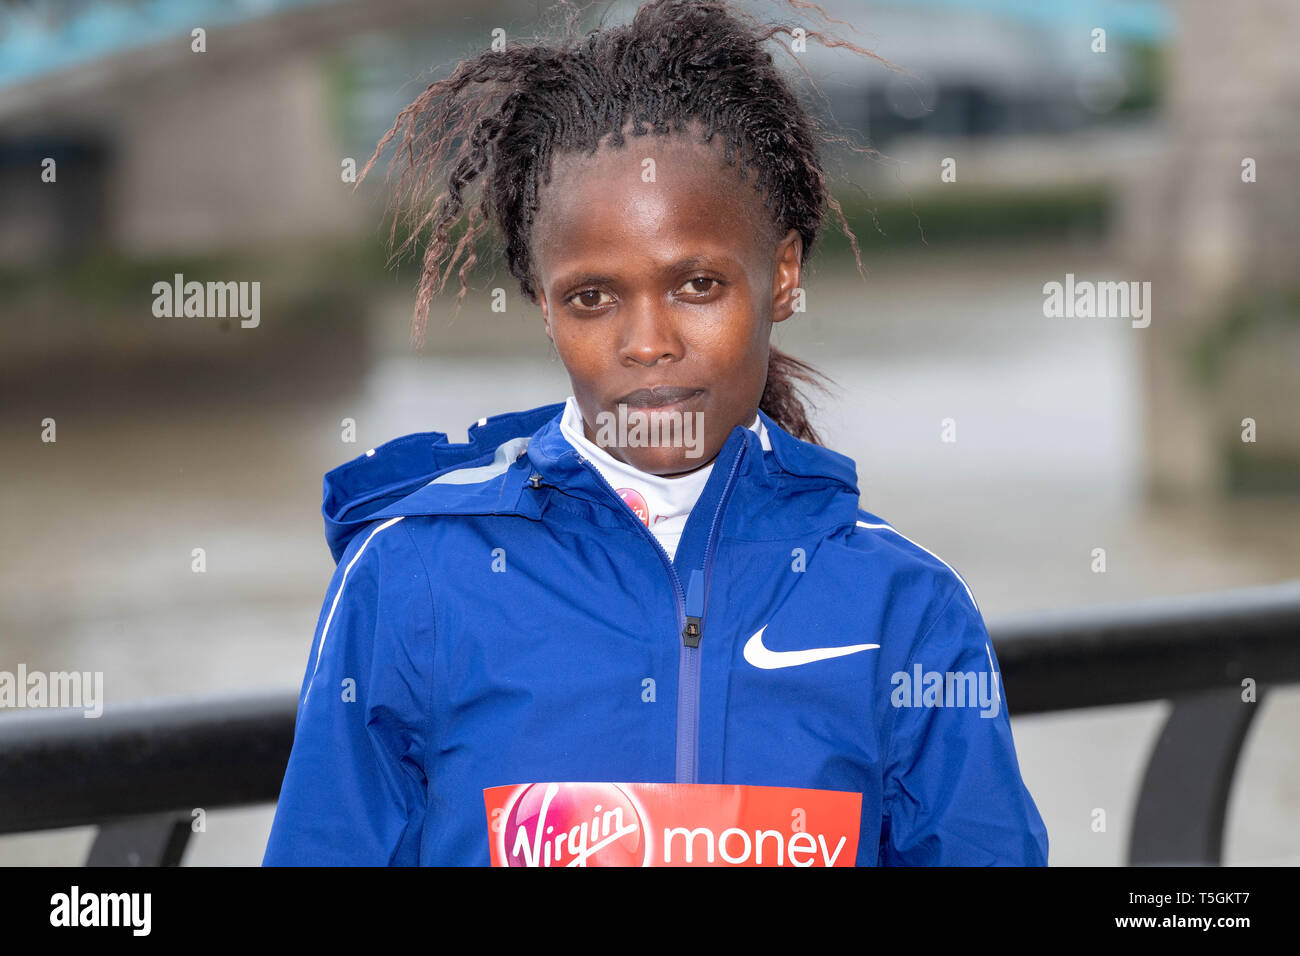 25thApril Londres 2019, Virgin Money Maratón de Londres la mujer Photocall corredores de élite, Brigid Kosgei Crédito: Ian Davidson/Alamy Live News Foto de stock